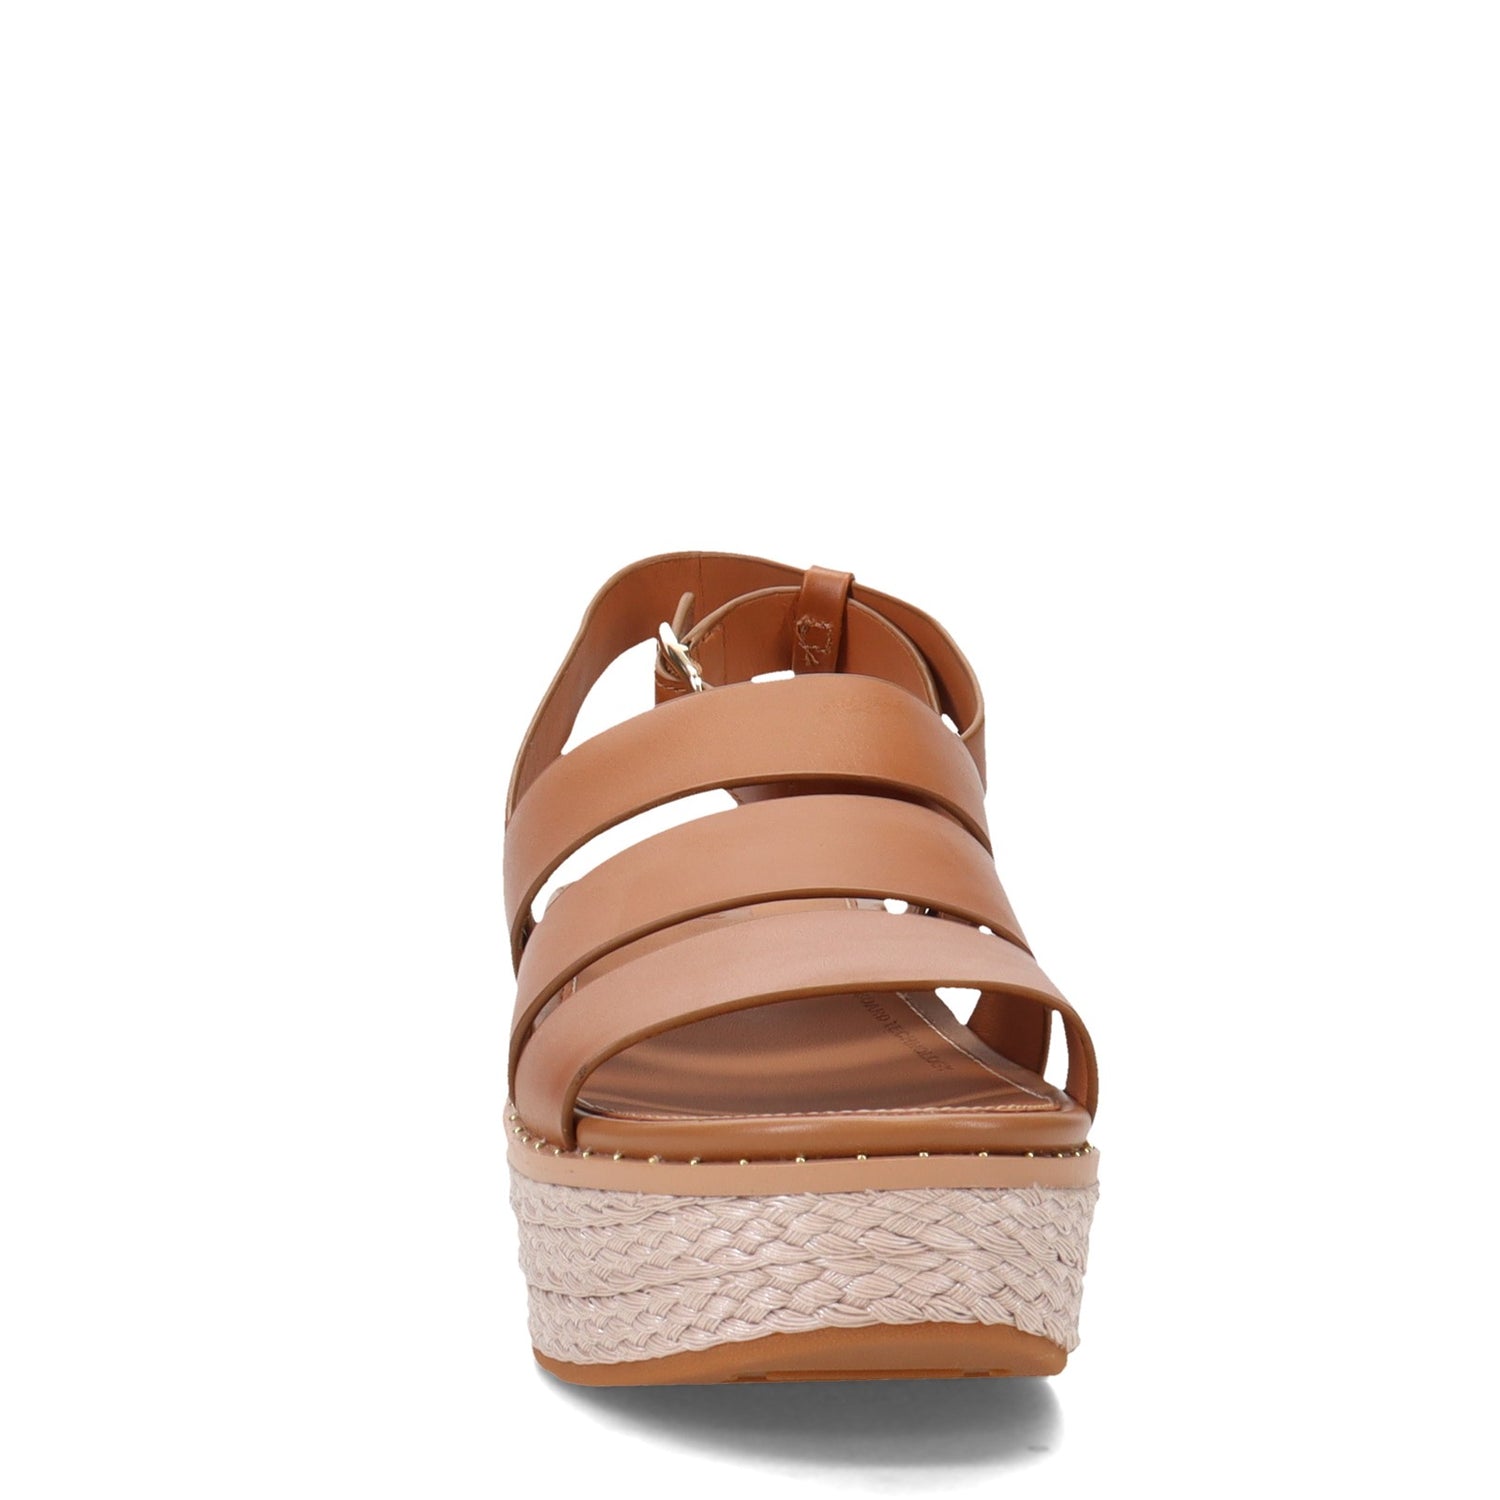 Peltz Shoes  Women's FitFlop Eloise Wedge Sandal Light Tan AY6-592